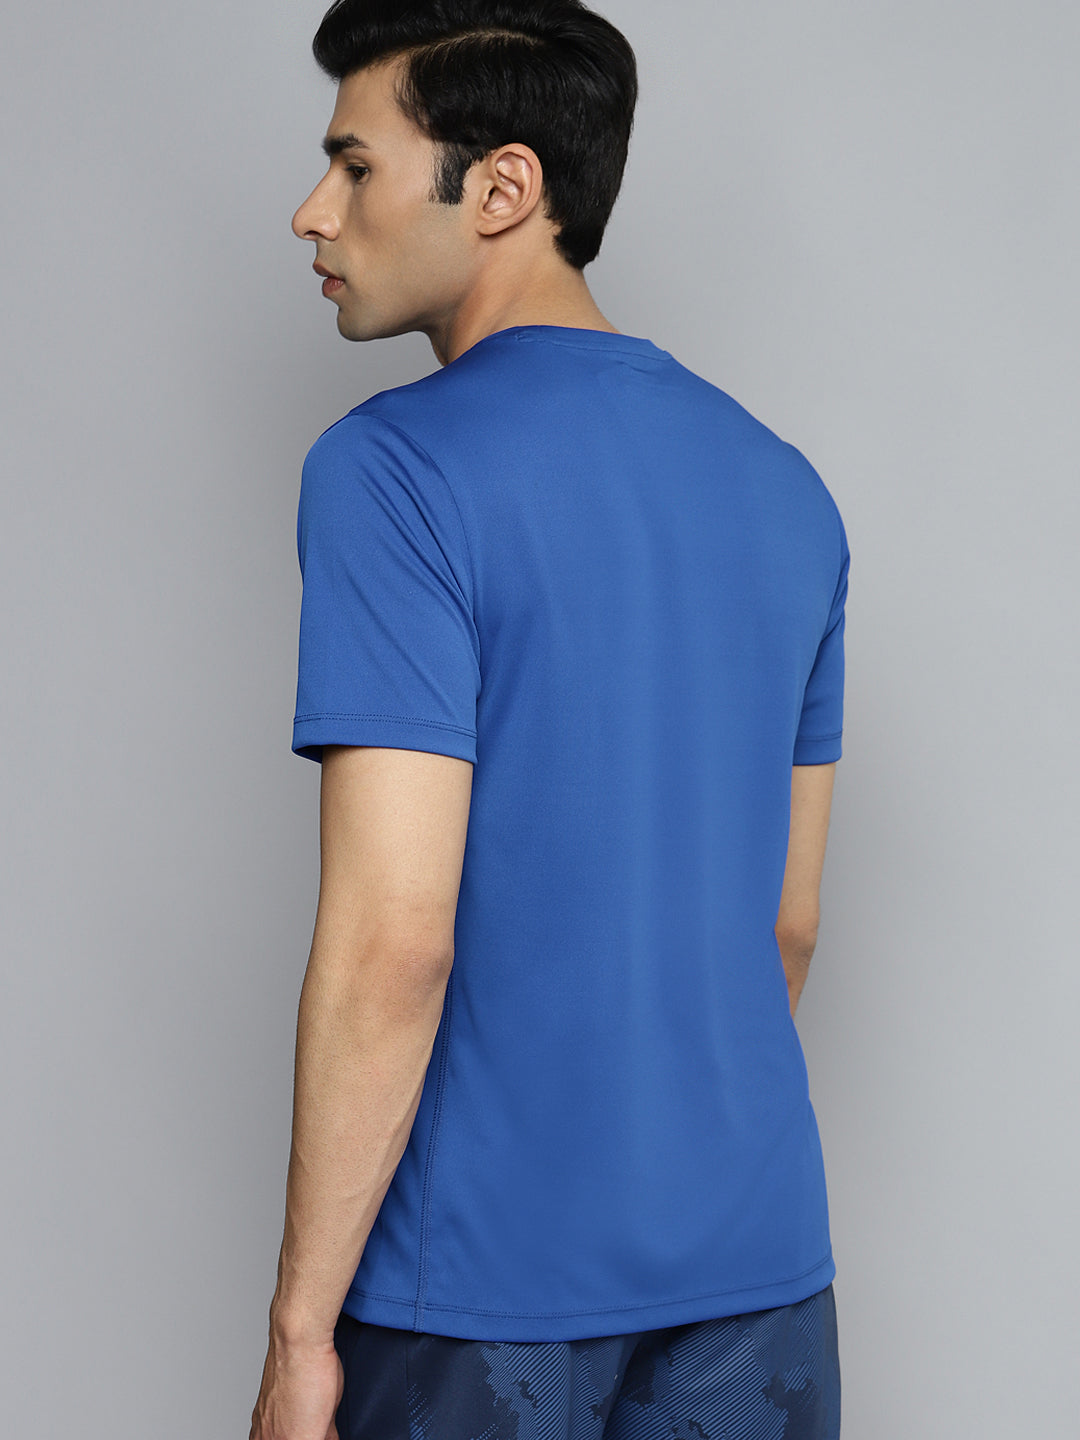 Alcis Men Blue Typography Printed Slim Fit Training or Gym T-shirt